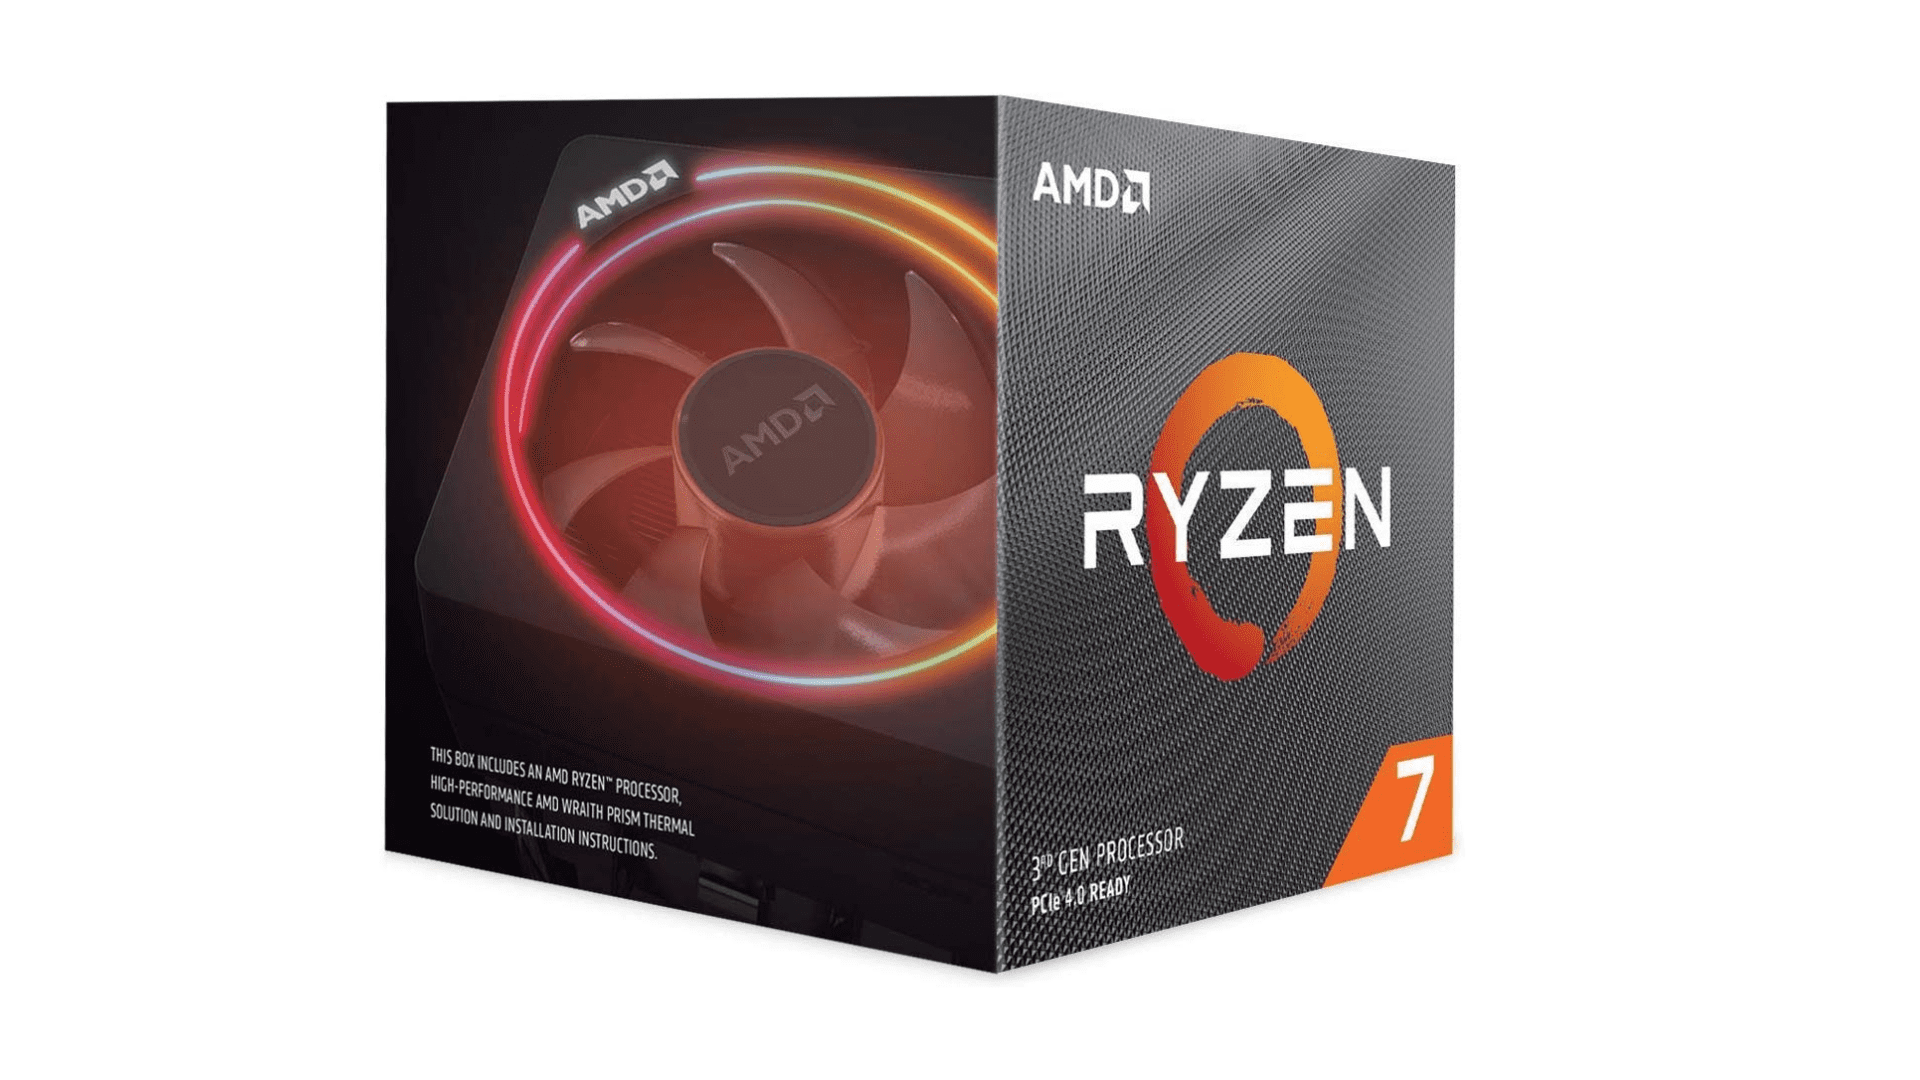 Ryzen 7 3700x vs i7-9700K: Which is Best?  - Performance in comparison